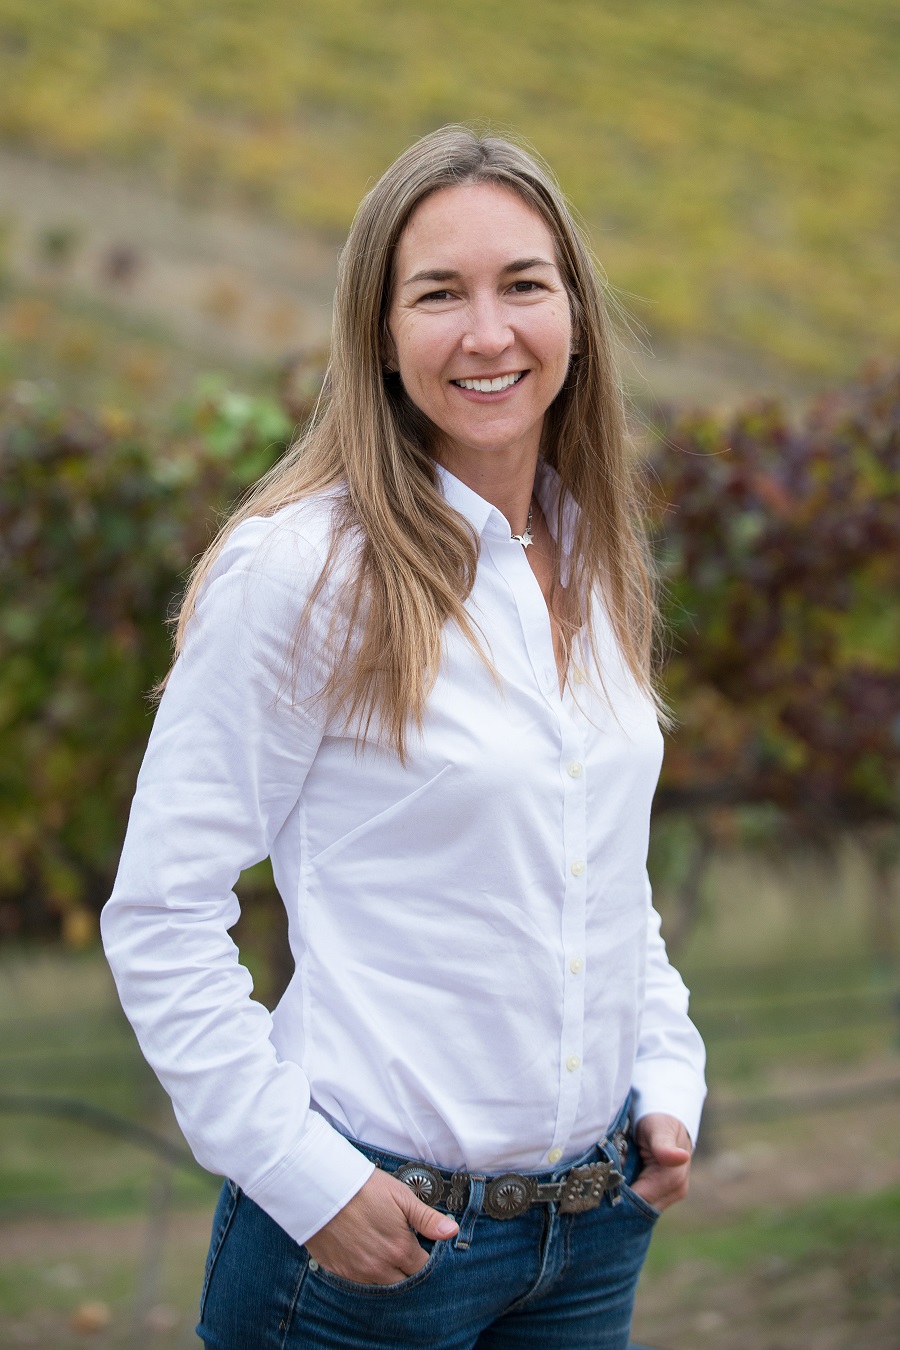 Photo of Dr. Nancy Glenn by Allison Corona, Boise State University.